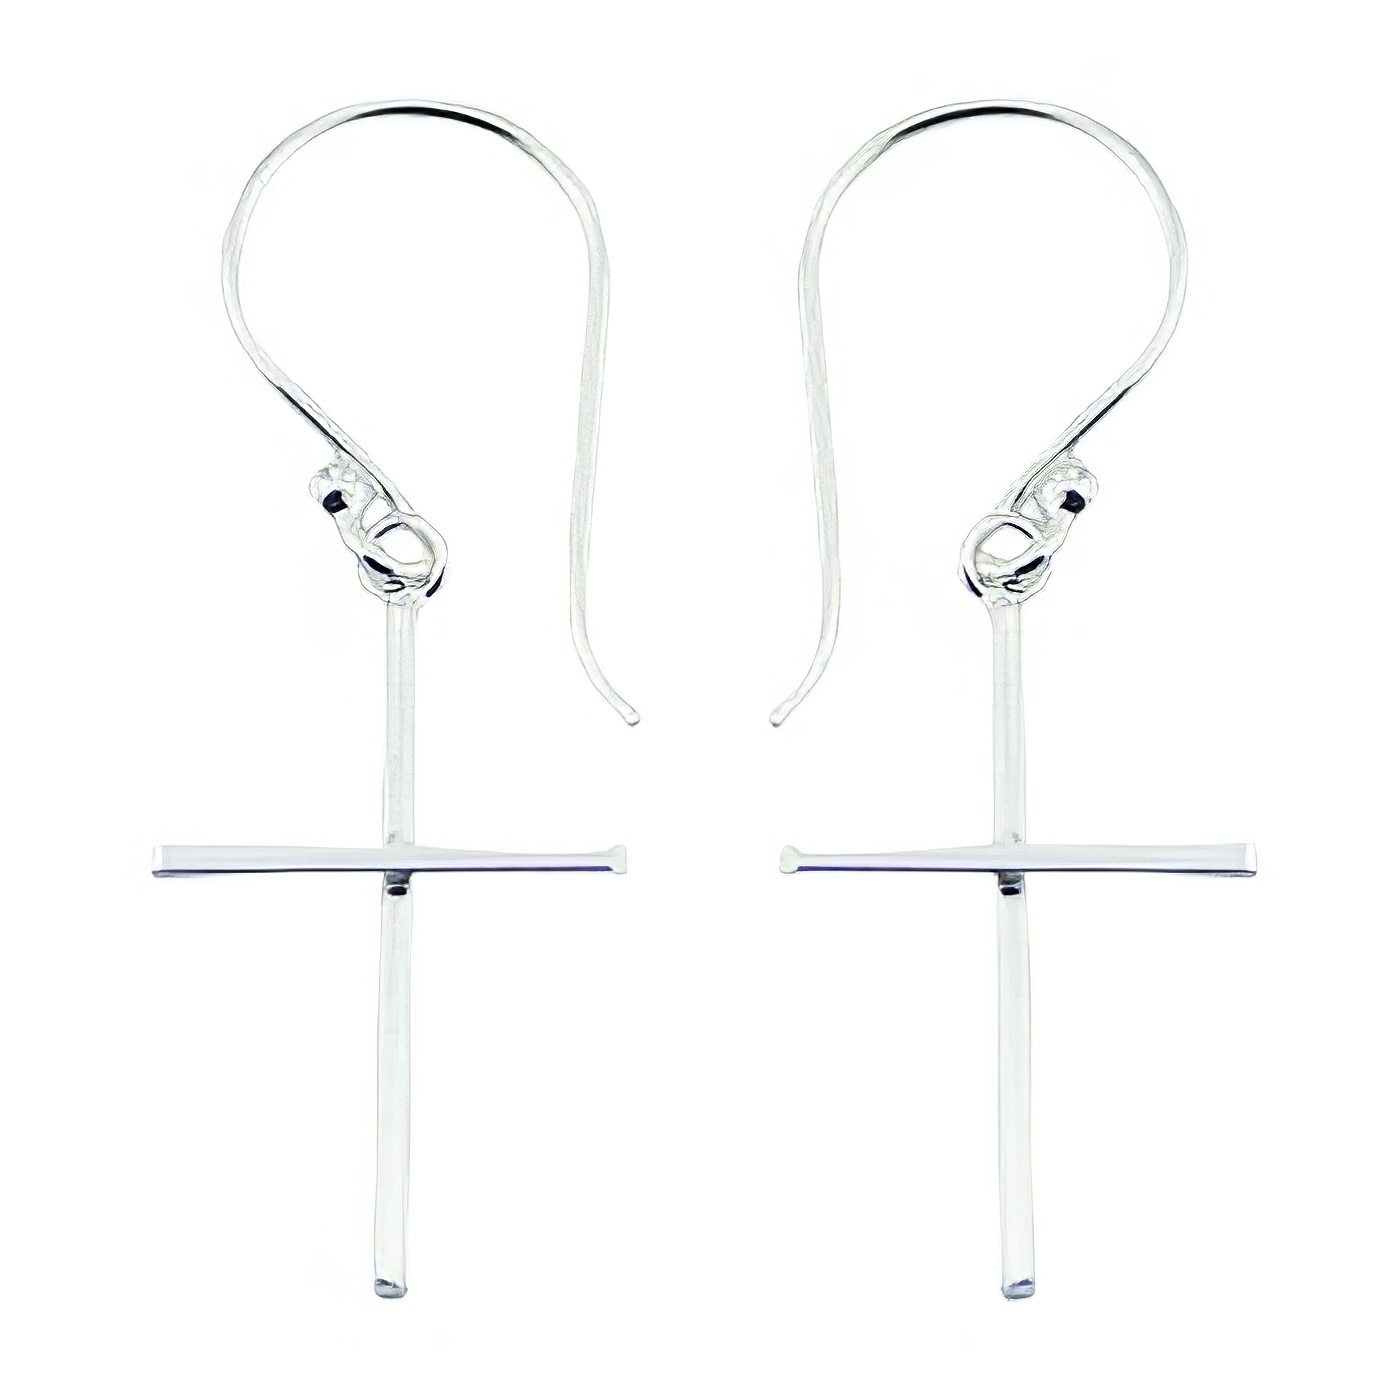 925 Sterling Silver Cross Dangle Earrings On Swing Loops by BeYindi 